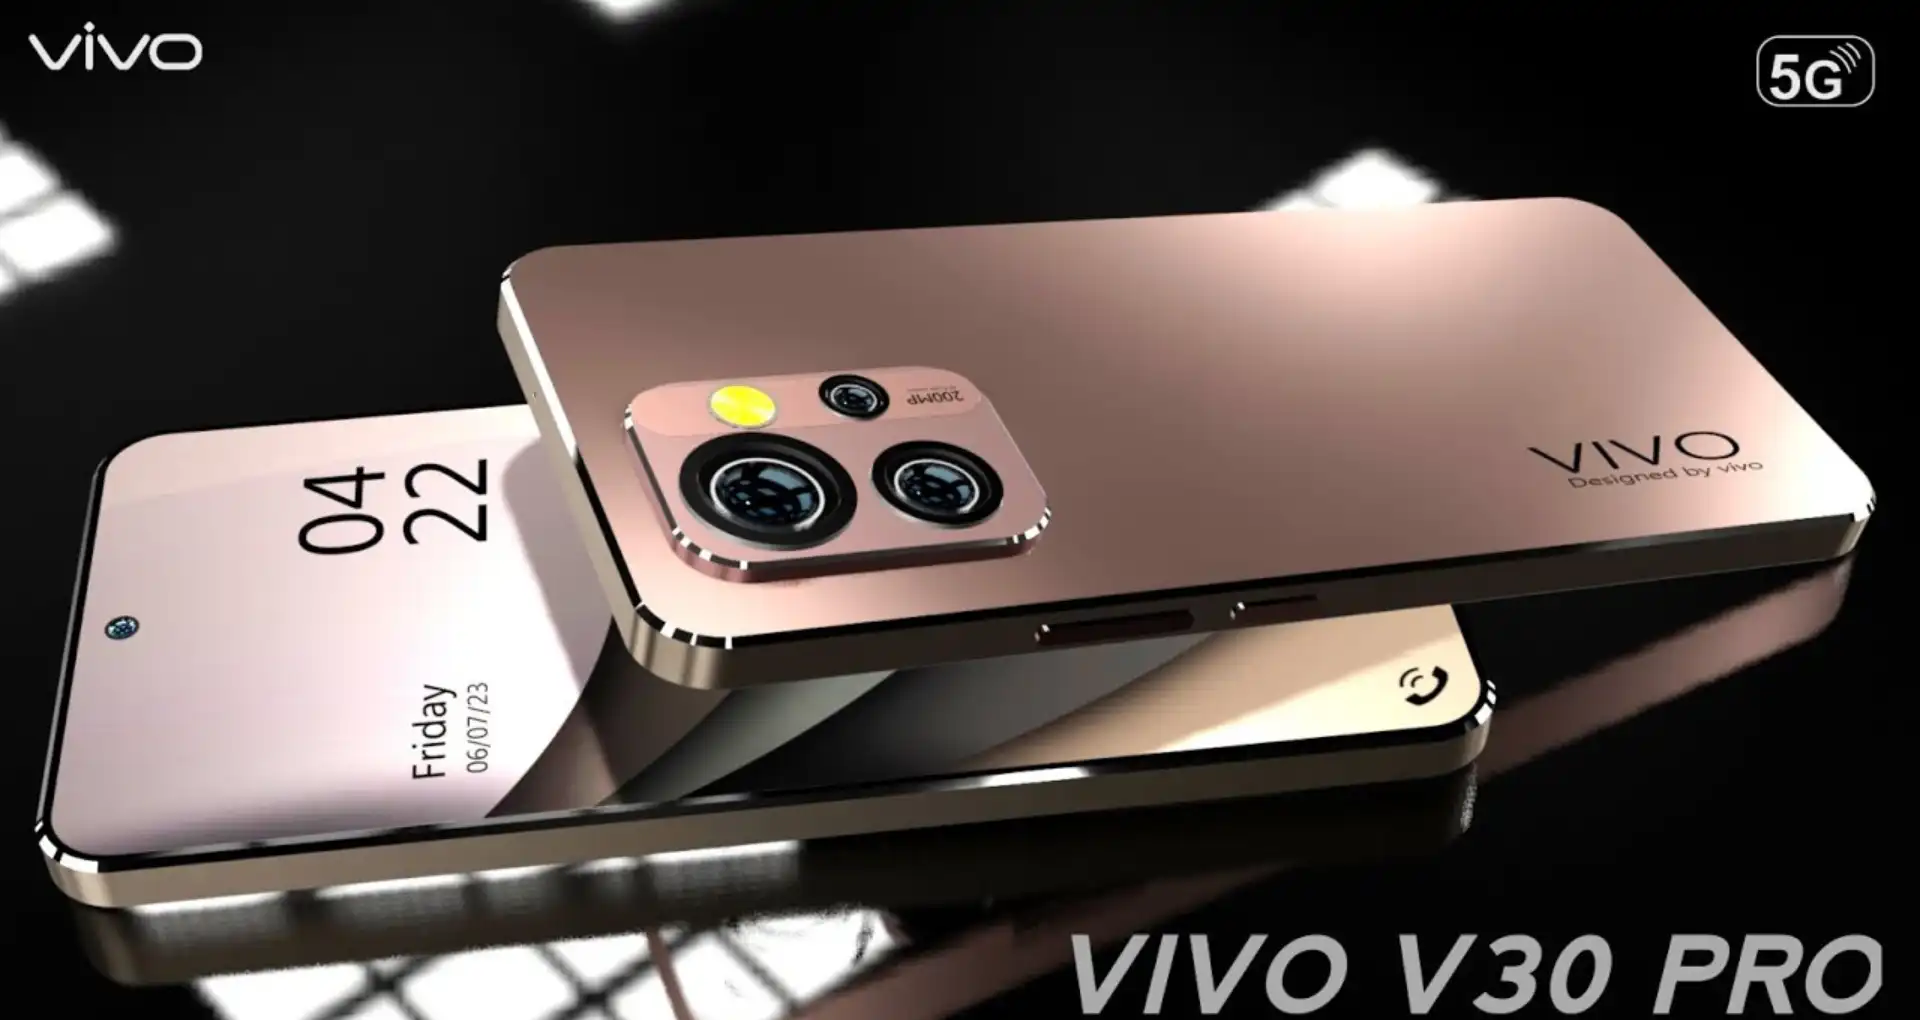 Vivo V30 Pro, Smartphone 5G dengan Performa dan Kamera Mumpuni